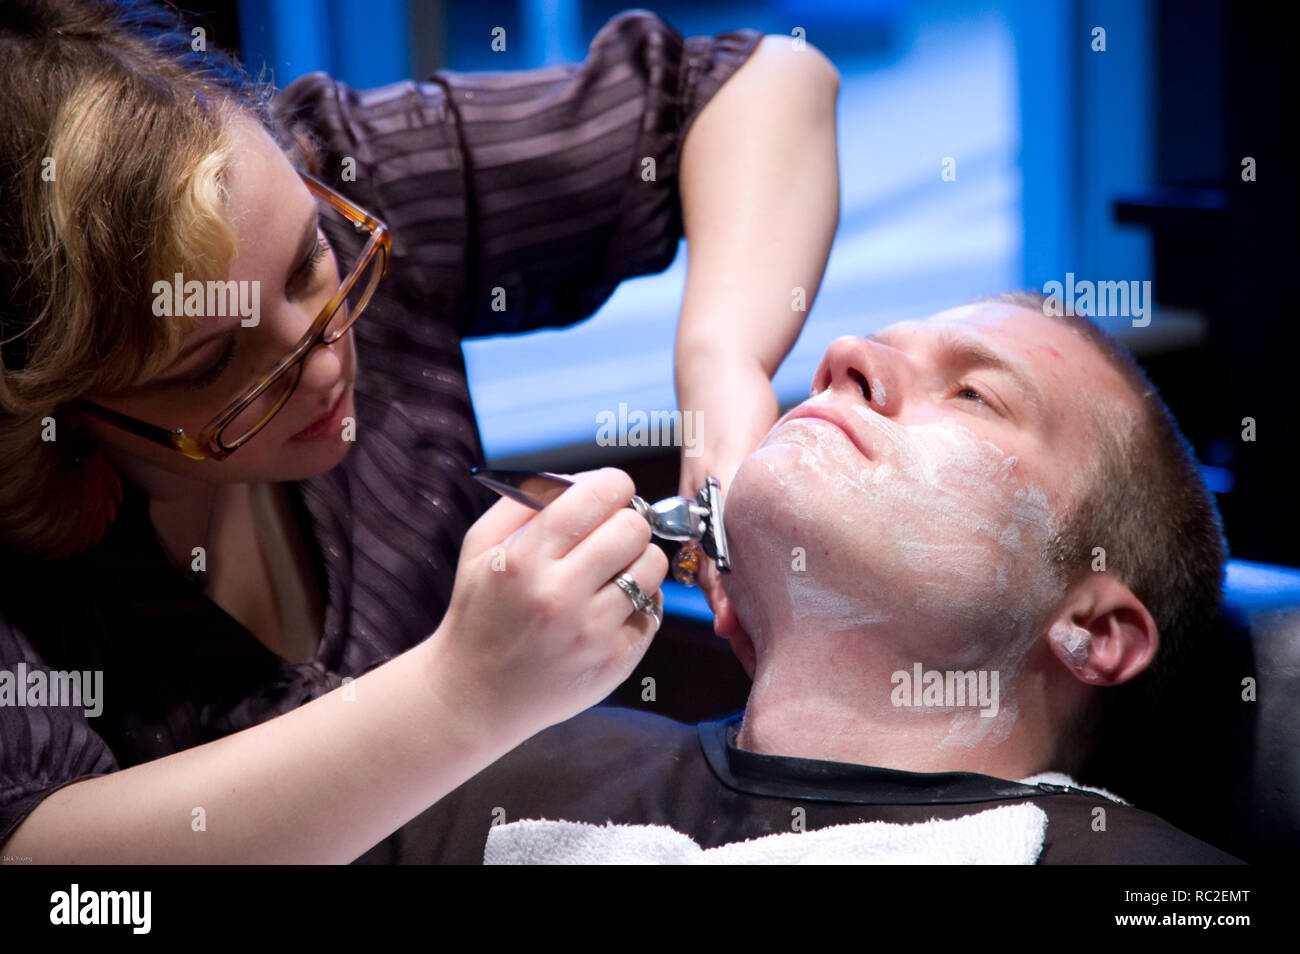 Men get grooming services at barbershop for men Stock Photo